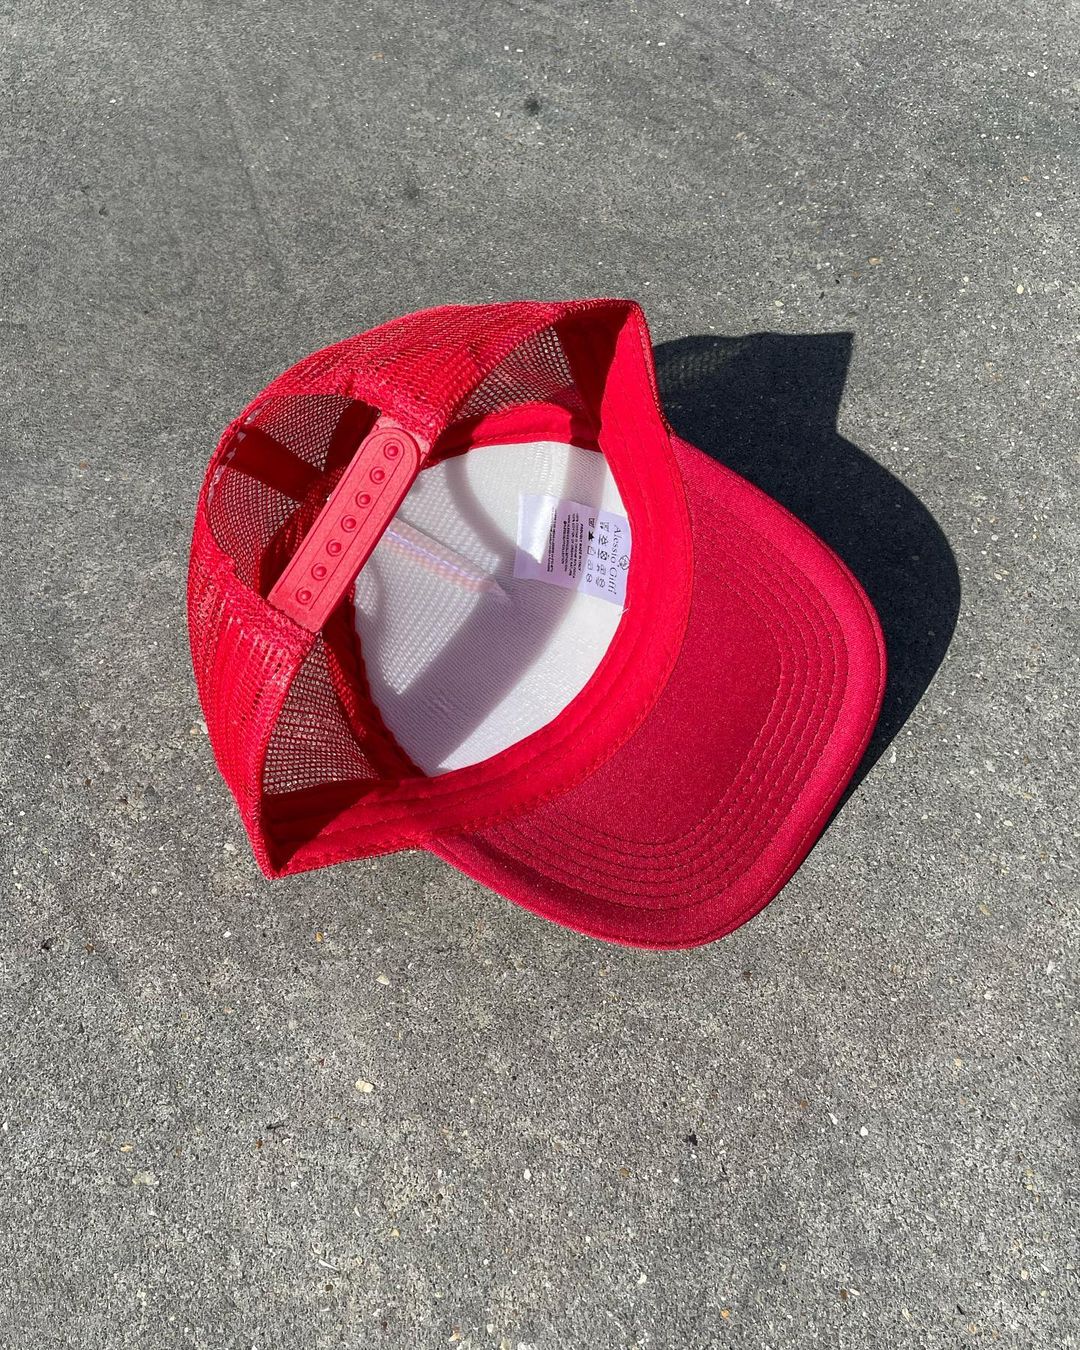 Image of Fire red heat reactive trucker hat